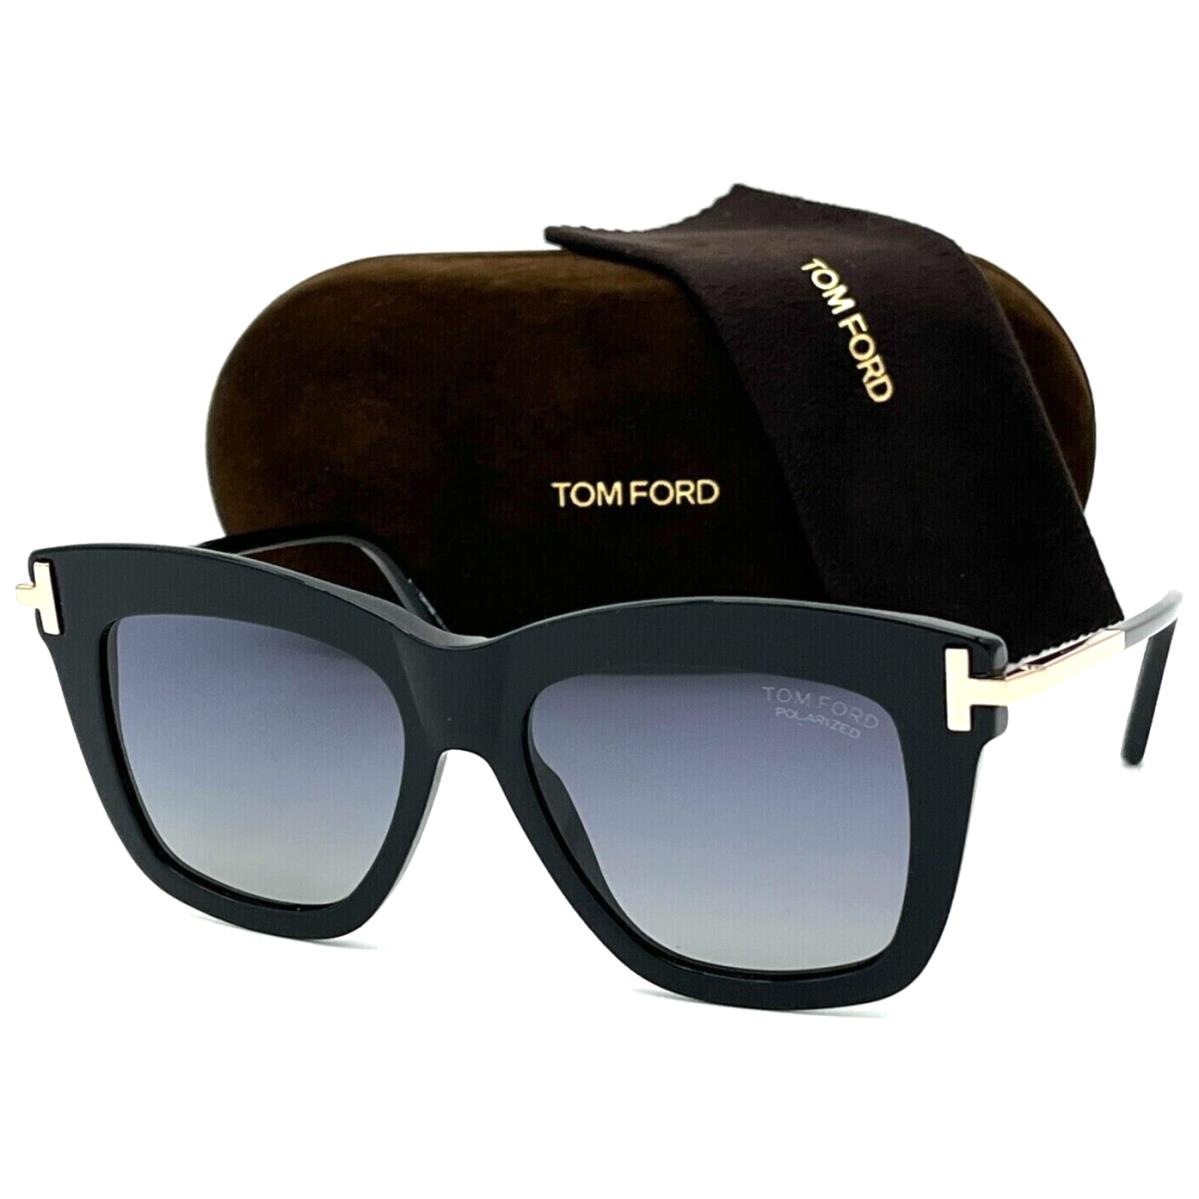 Tom Ford TF822 01D Dasha Black/grey Polarized Gradient Lens Sunglasses 52-16